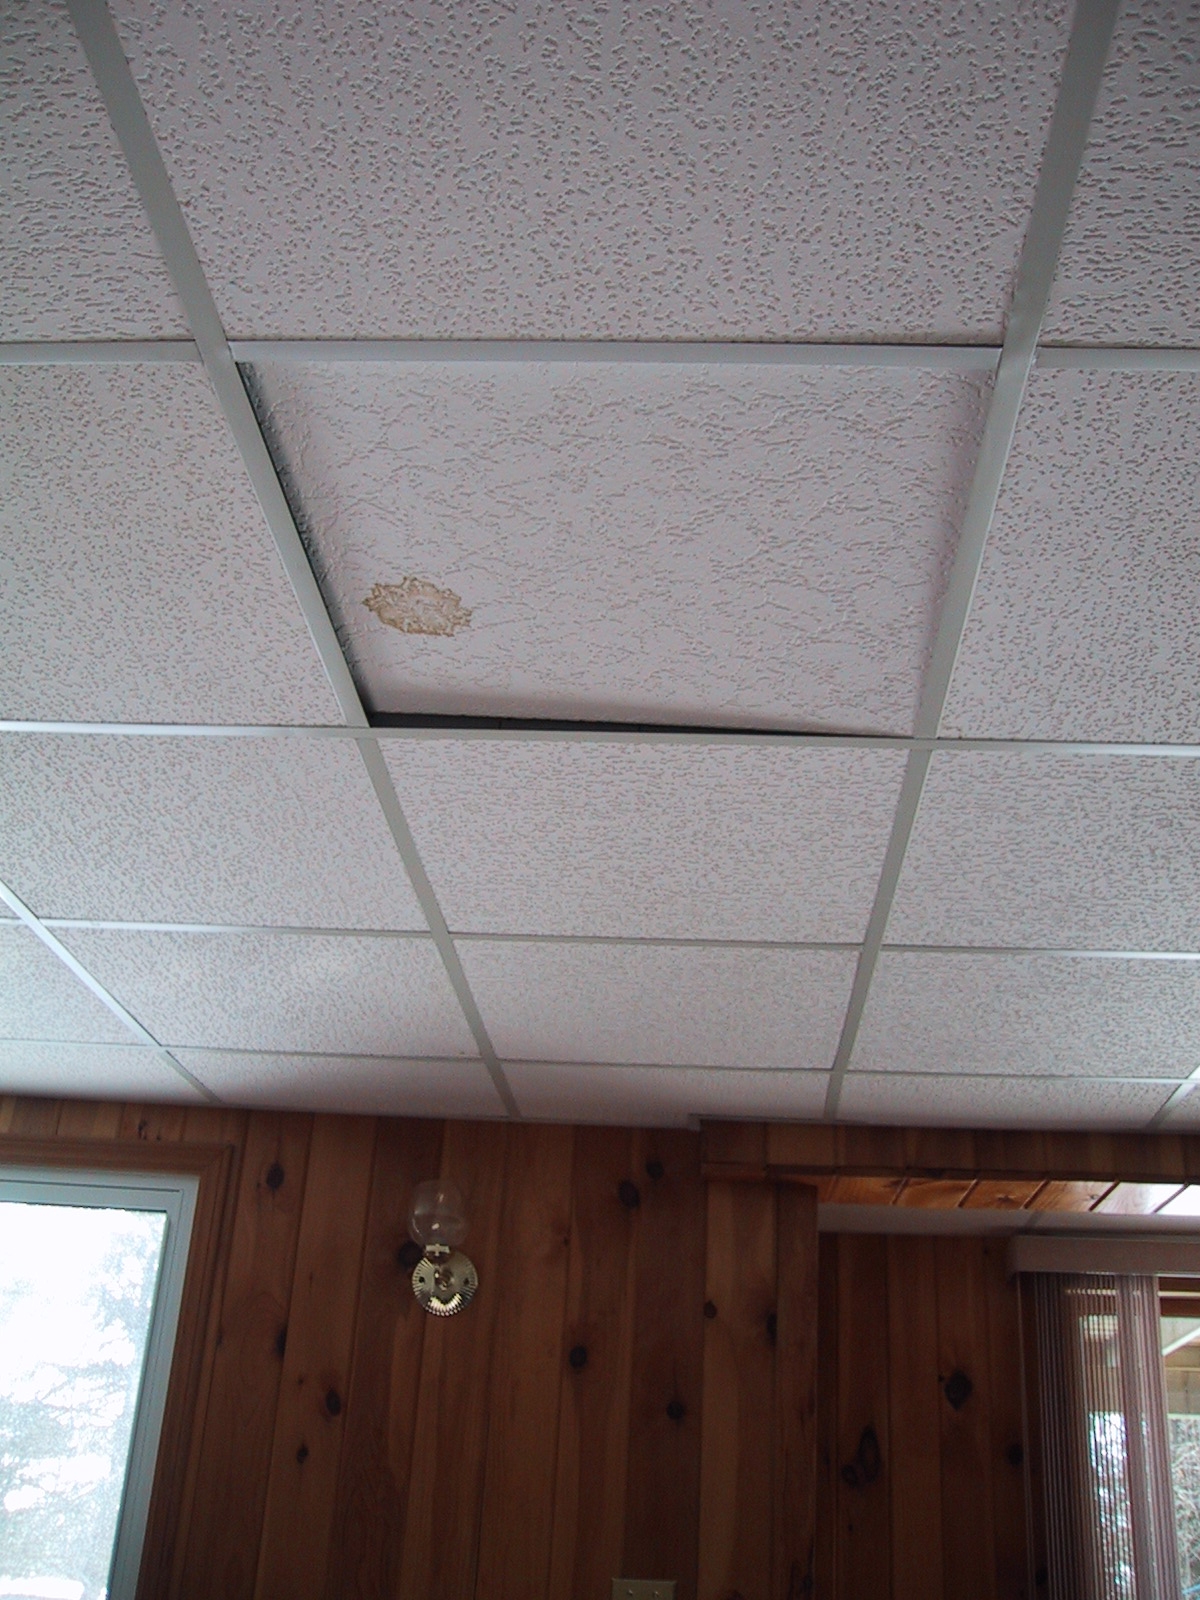 Old Drop Ceiling Tiles Asbestos Old Drop Ceiling Tiles Asbestos new water fresh stain on new ceiling tile 1200 X 1600